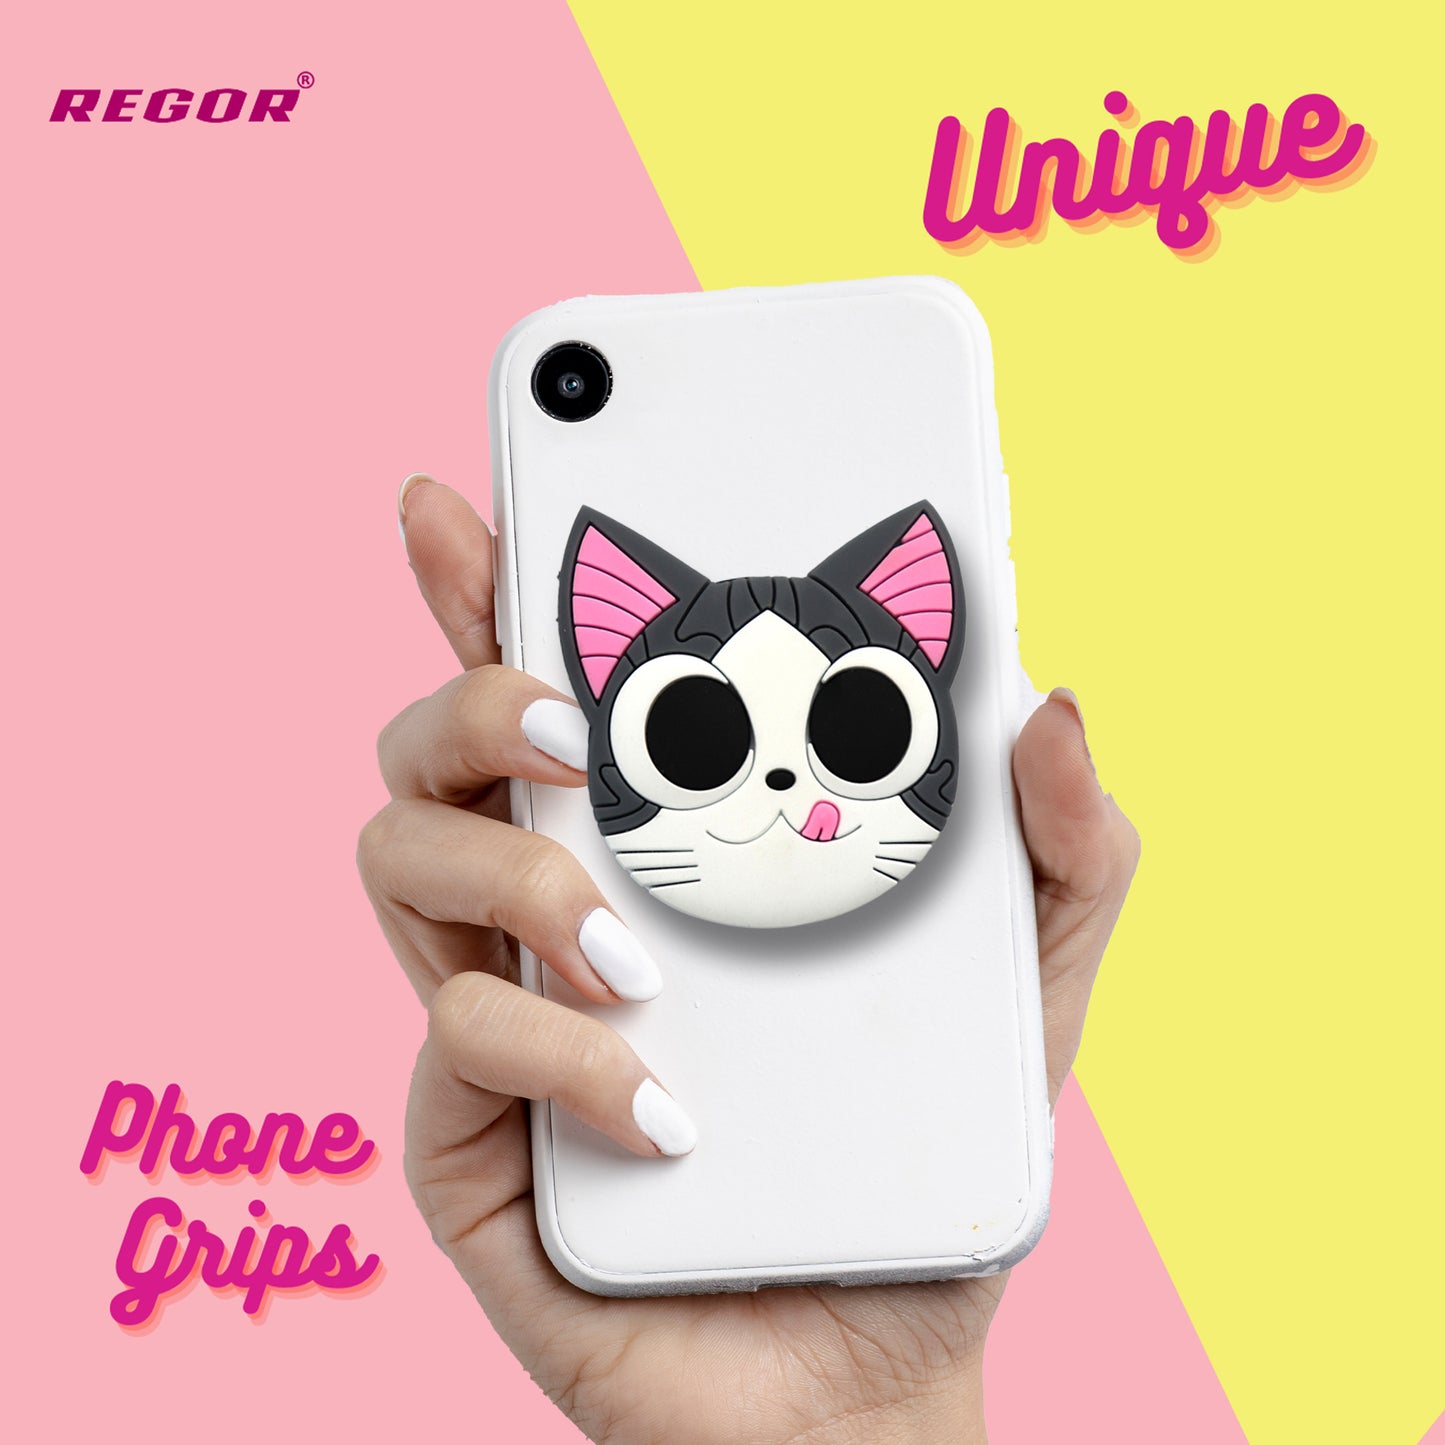 Phone Grip & Selfie Holder - Cat Face